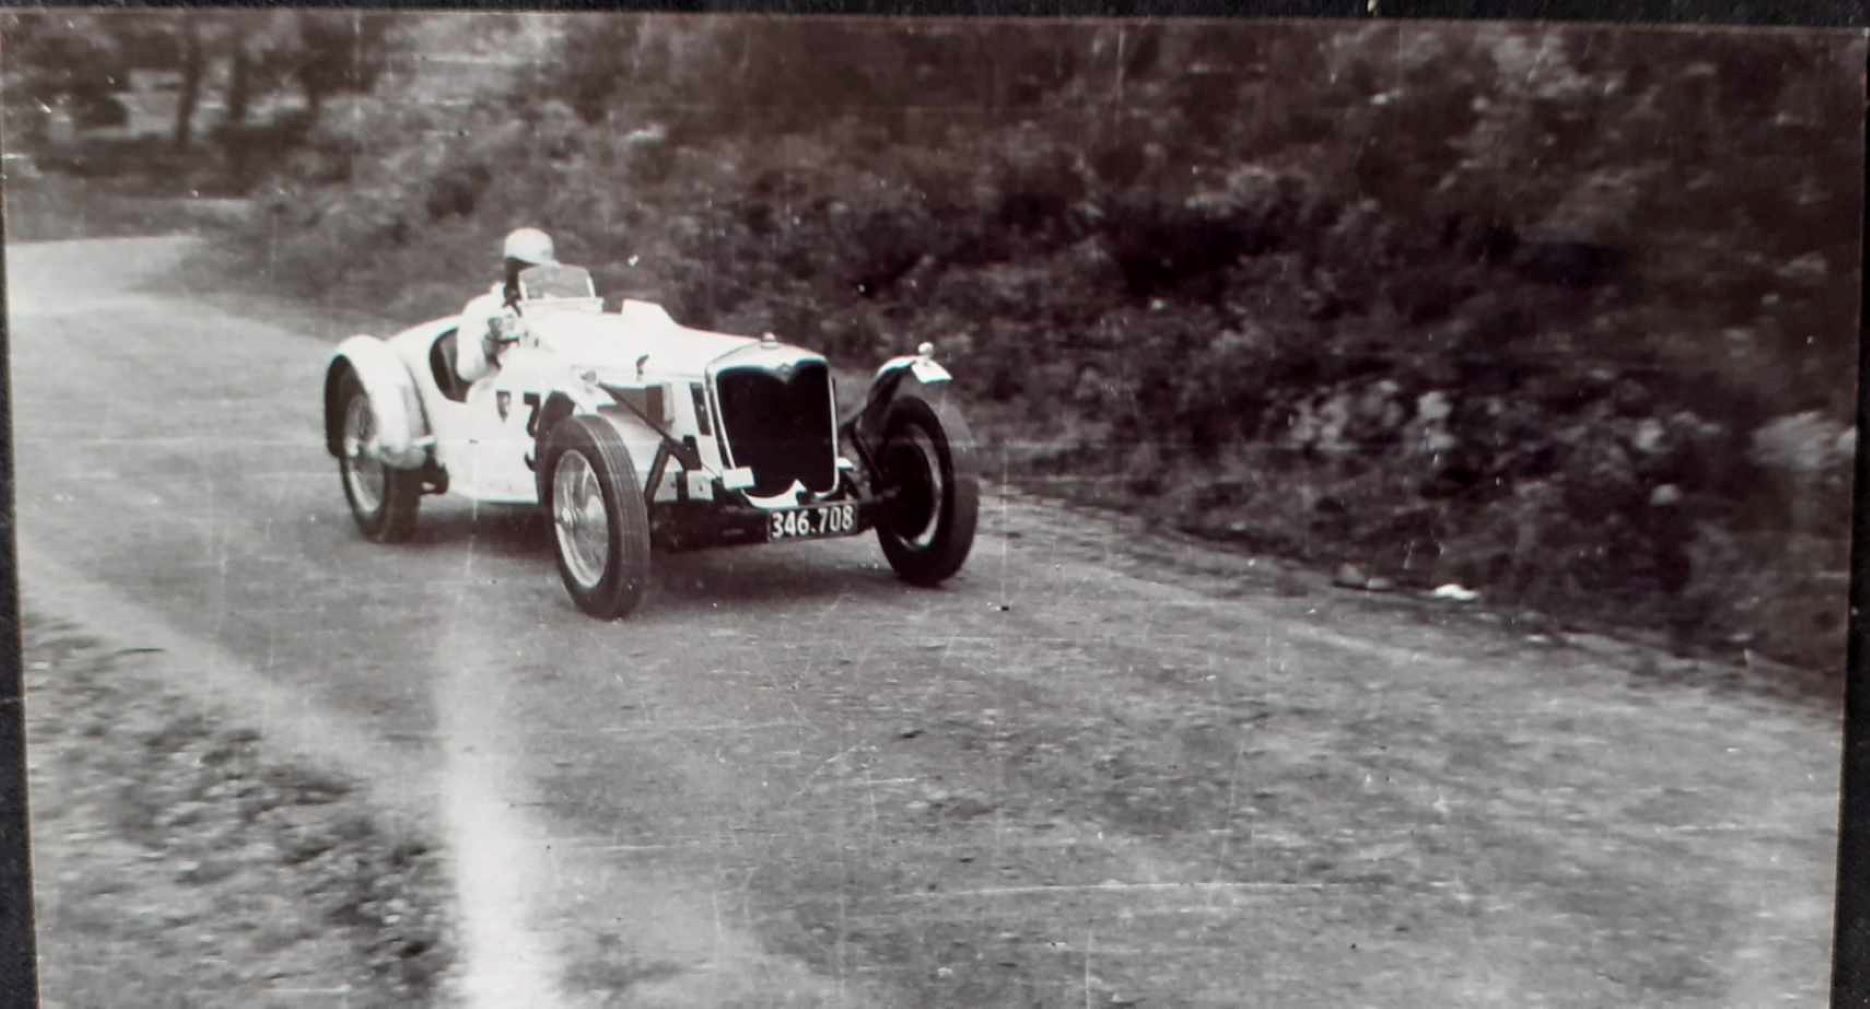 Name:  NSCC 1950 #0122 Riley Race #3 Q at Hill Climb - 346.708 1951 -56 plate 1950's - image Graeme Wel.jpg
Views: 160
Size:  178.4 KB